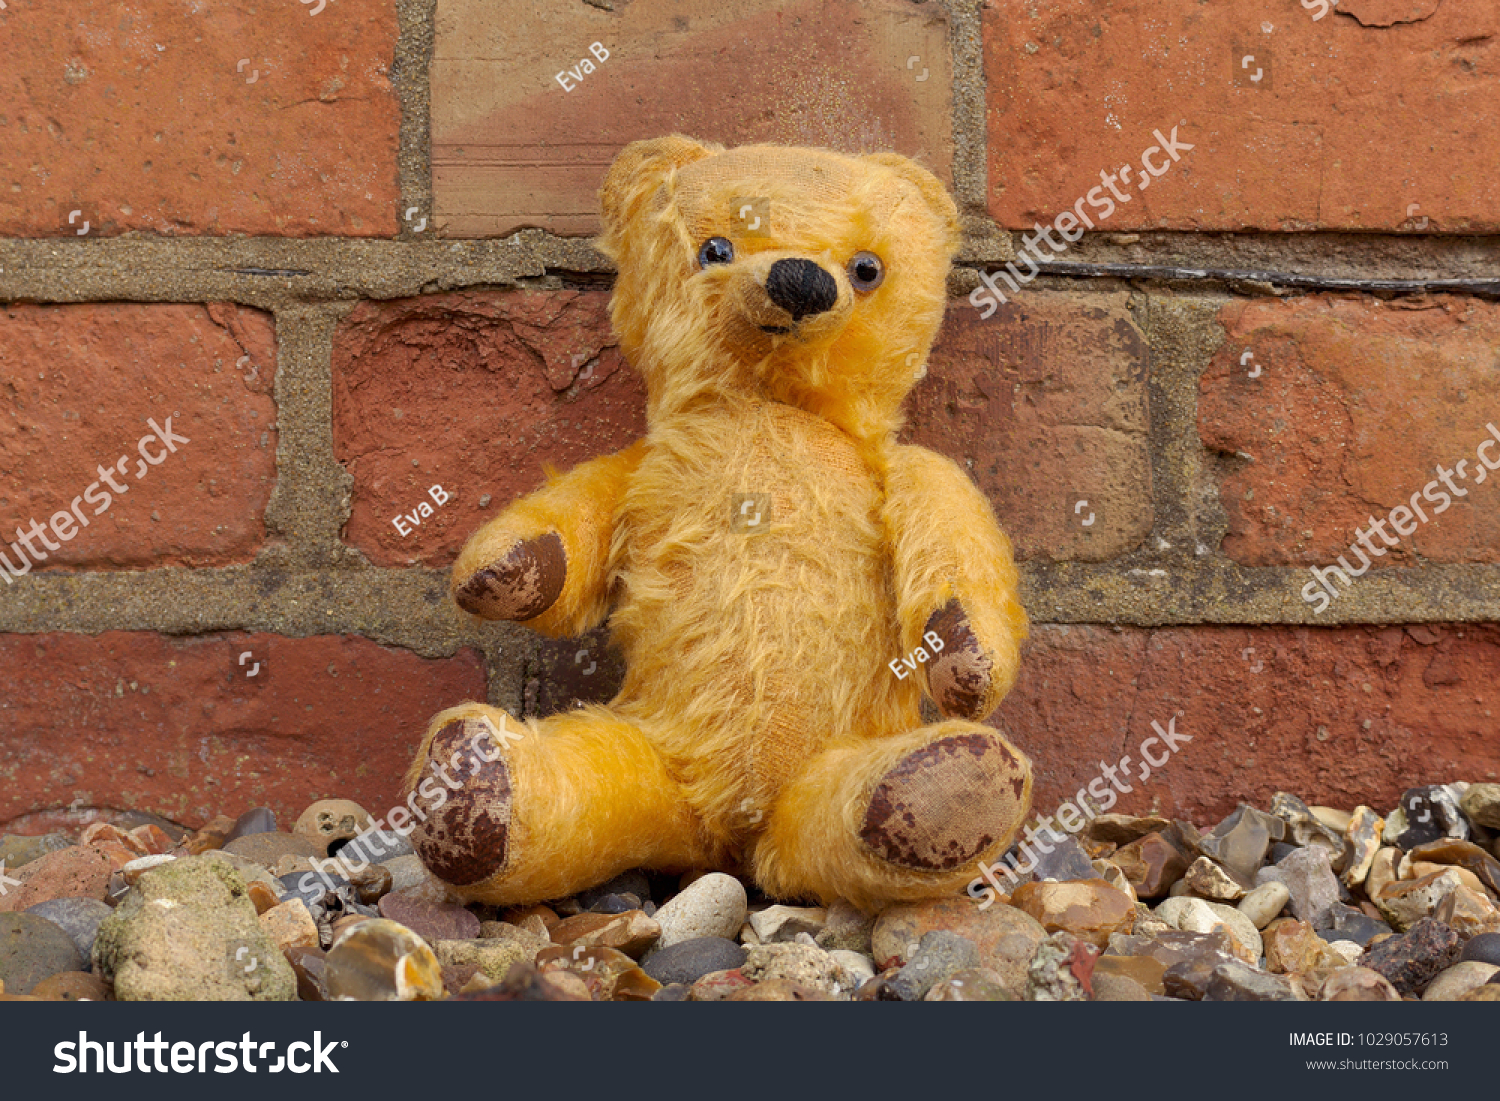 antique teddy bears